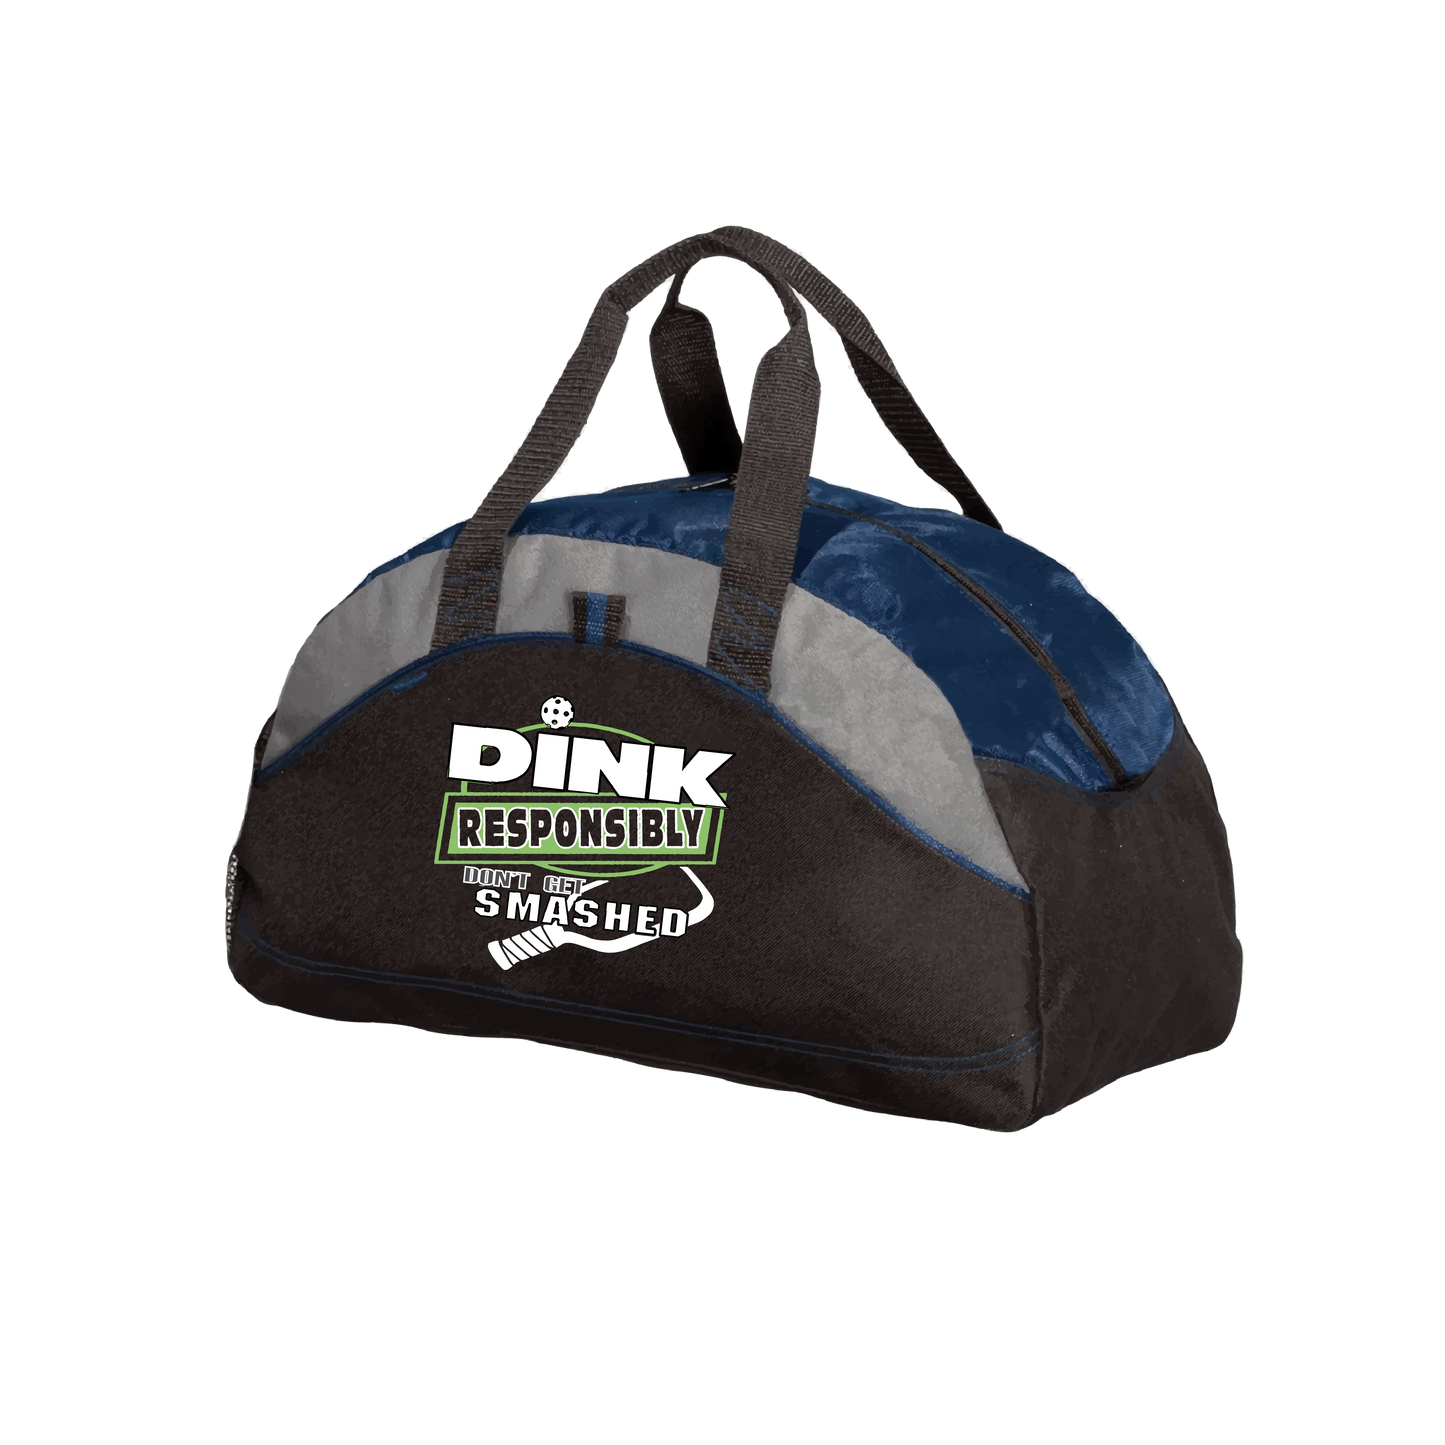 Dink Responsibly Don't Get Smashed | Pickleball Sports Duffel | Medium Size Court Bag